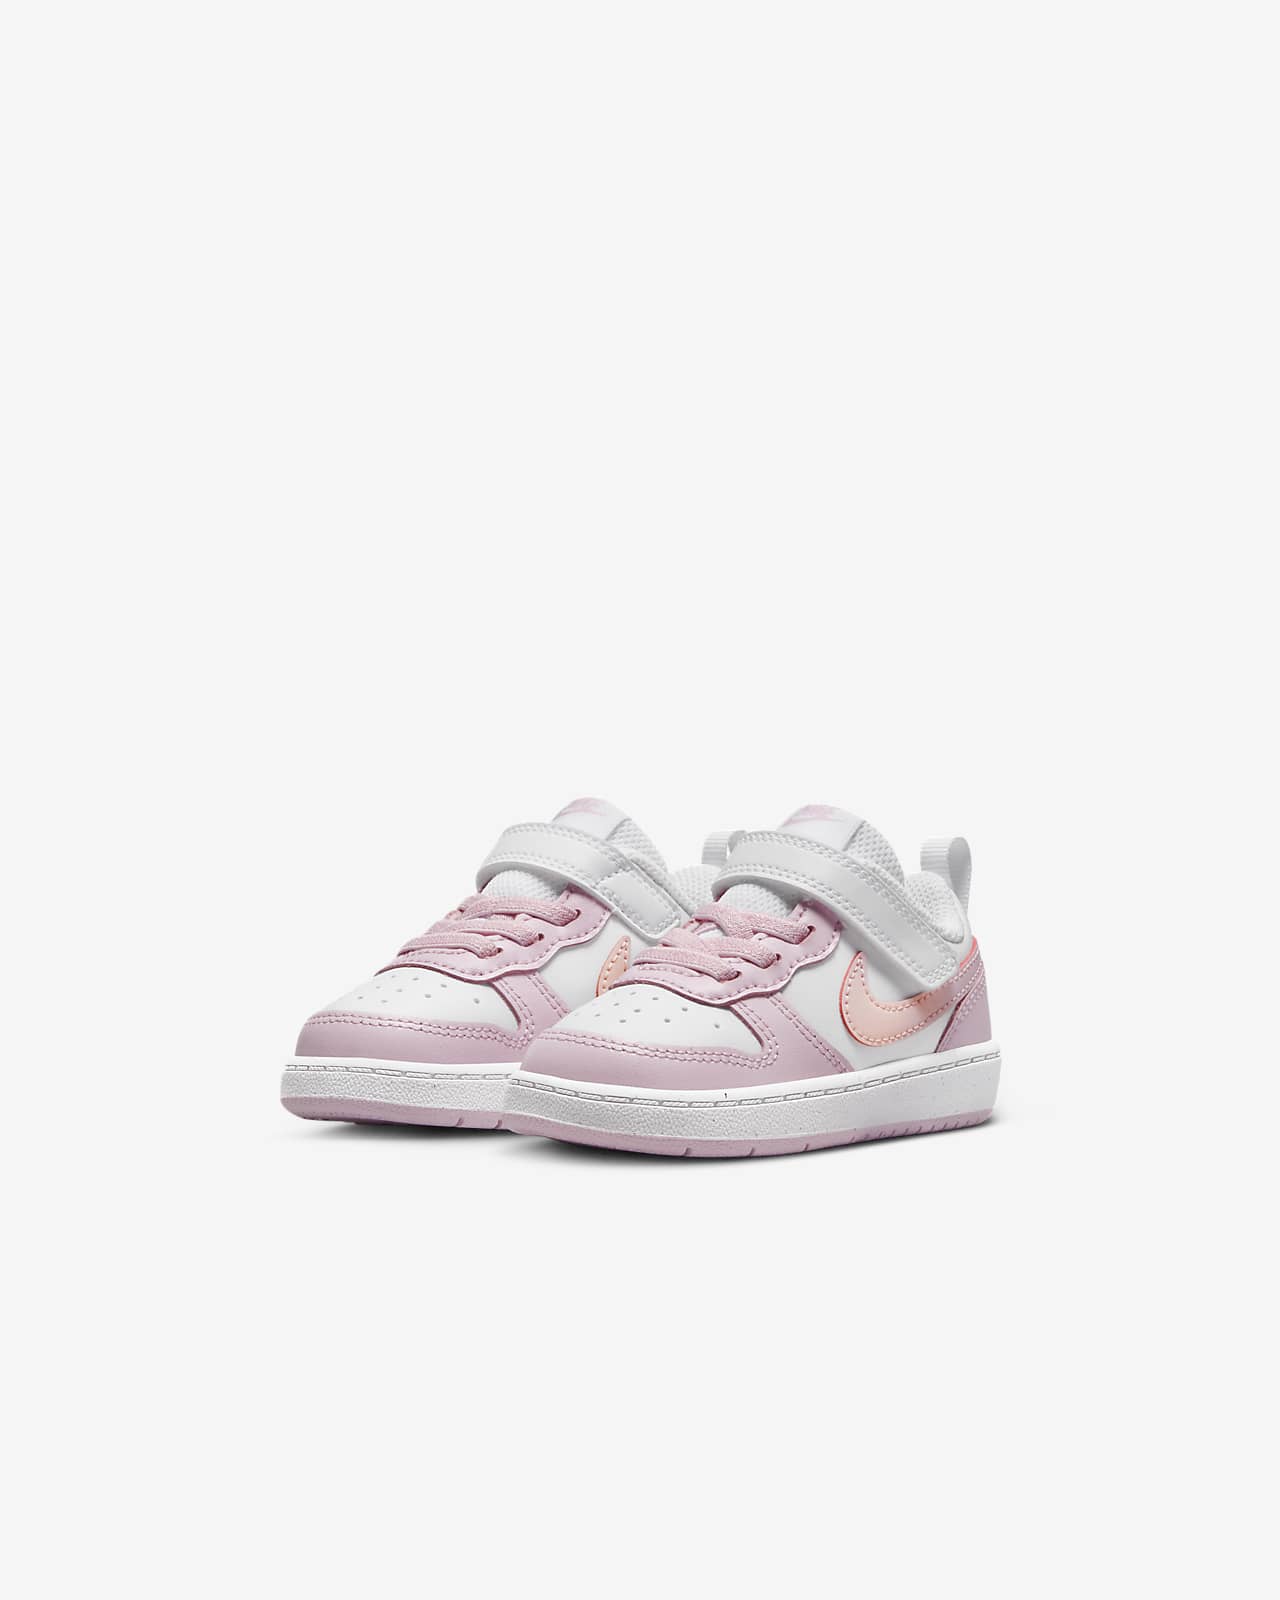 Court Borough Low 2 SE Baby/Toddler Shoes. Nike.com